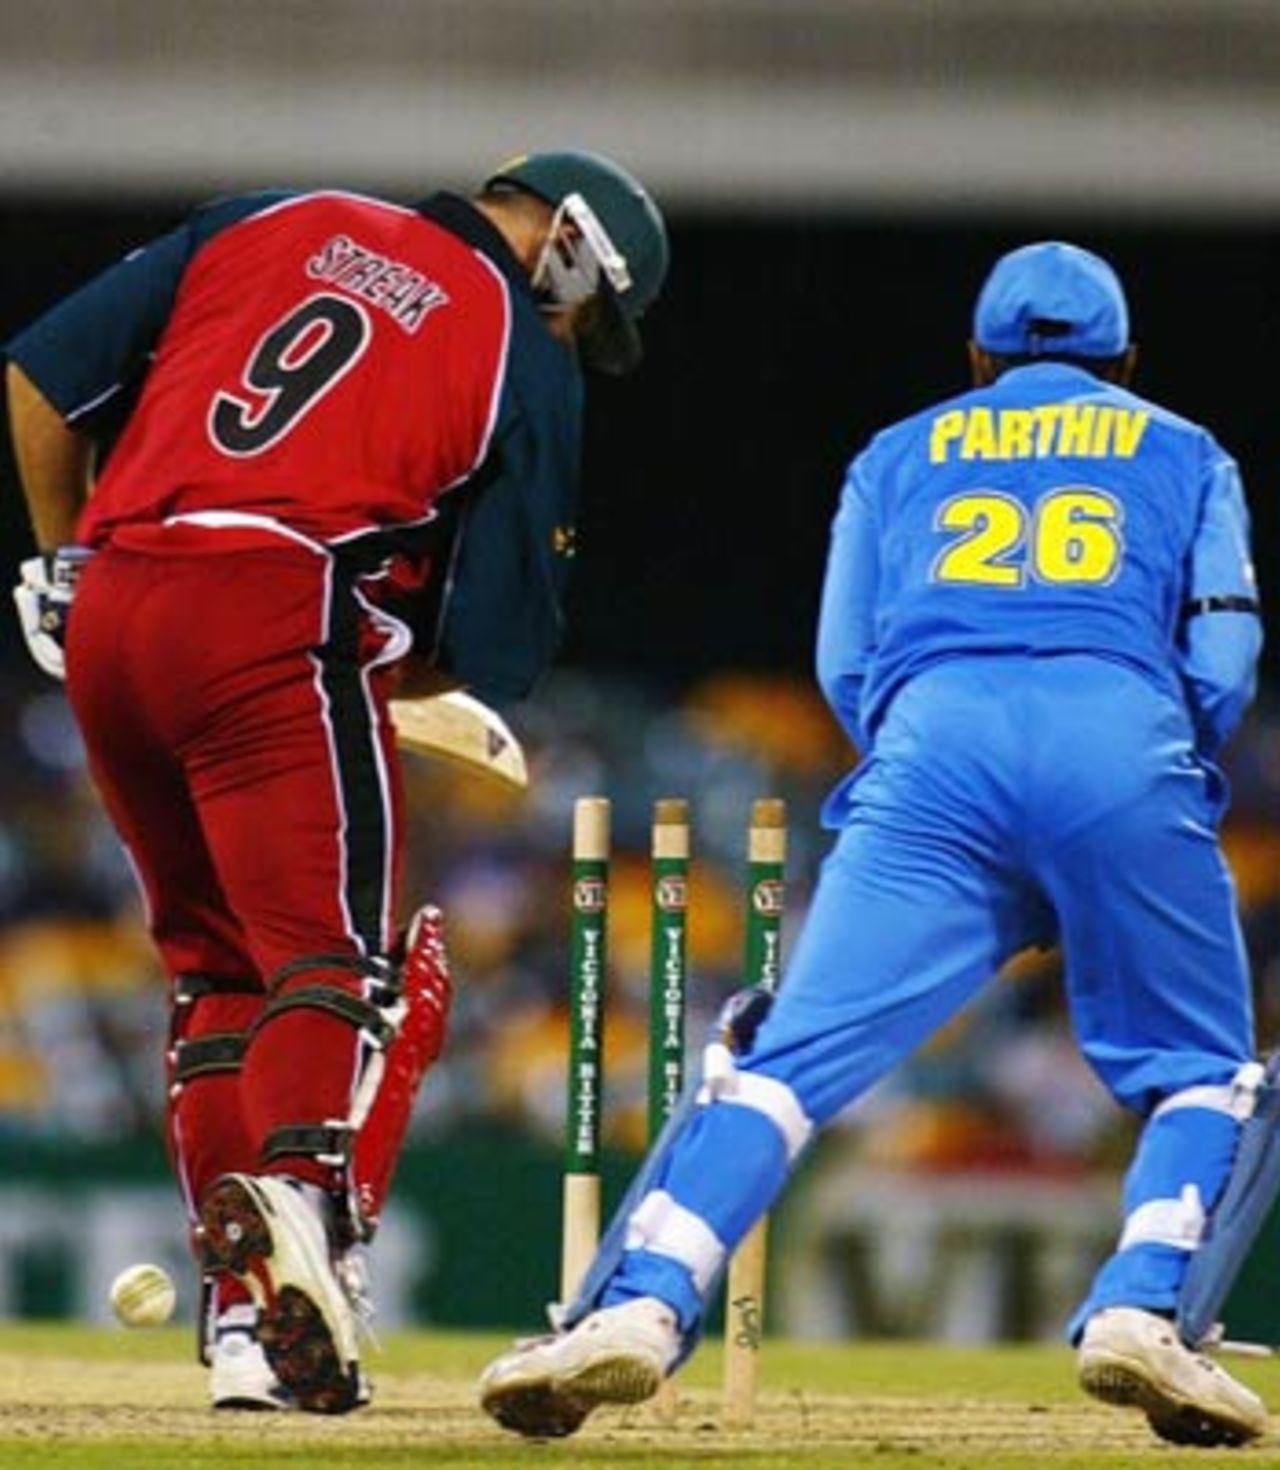 Heath Streak's run of good scores came to an end, India v Zimbabwe, VB Series, Brisbane, 6th ODI, January 20, 2004